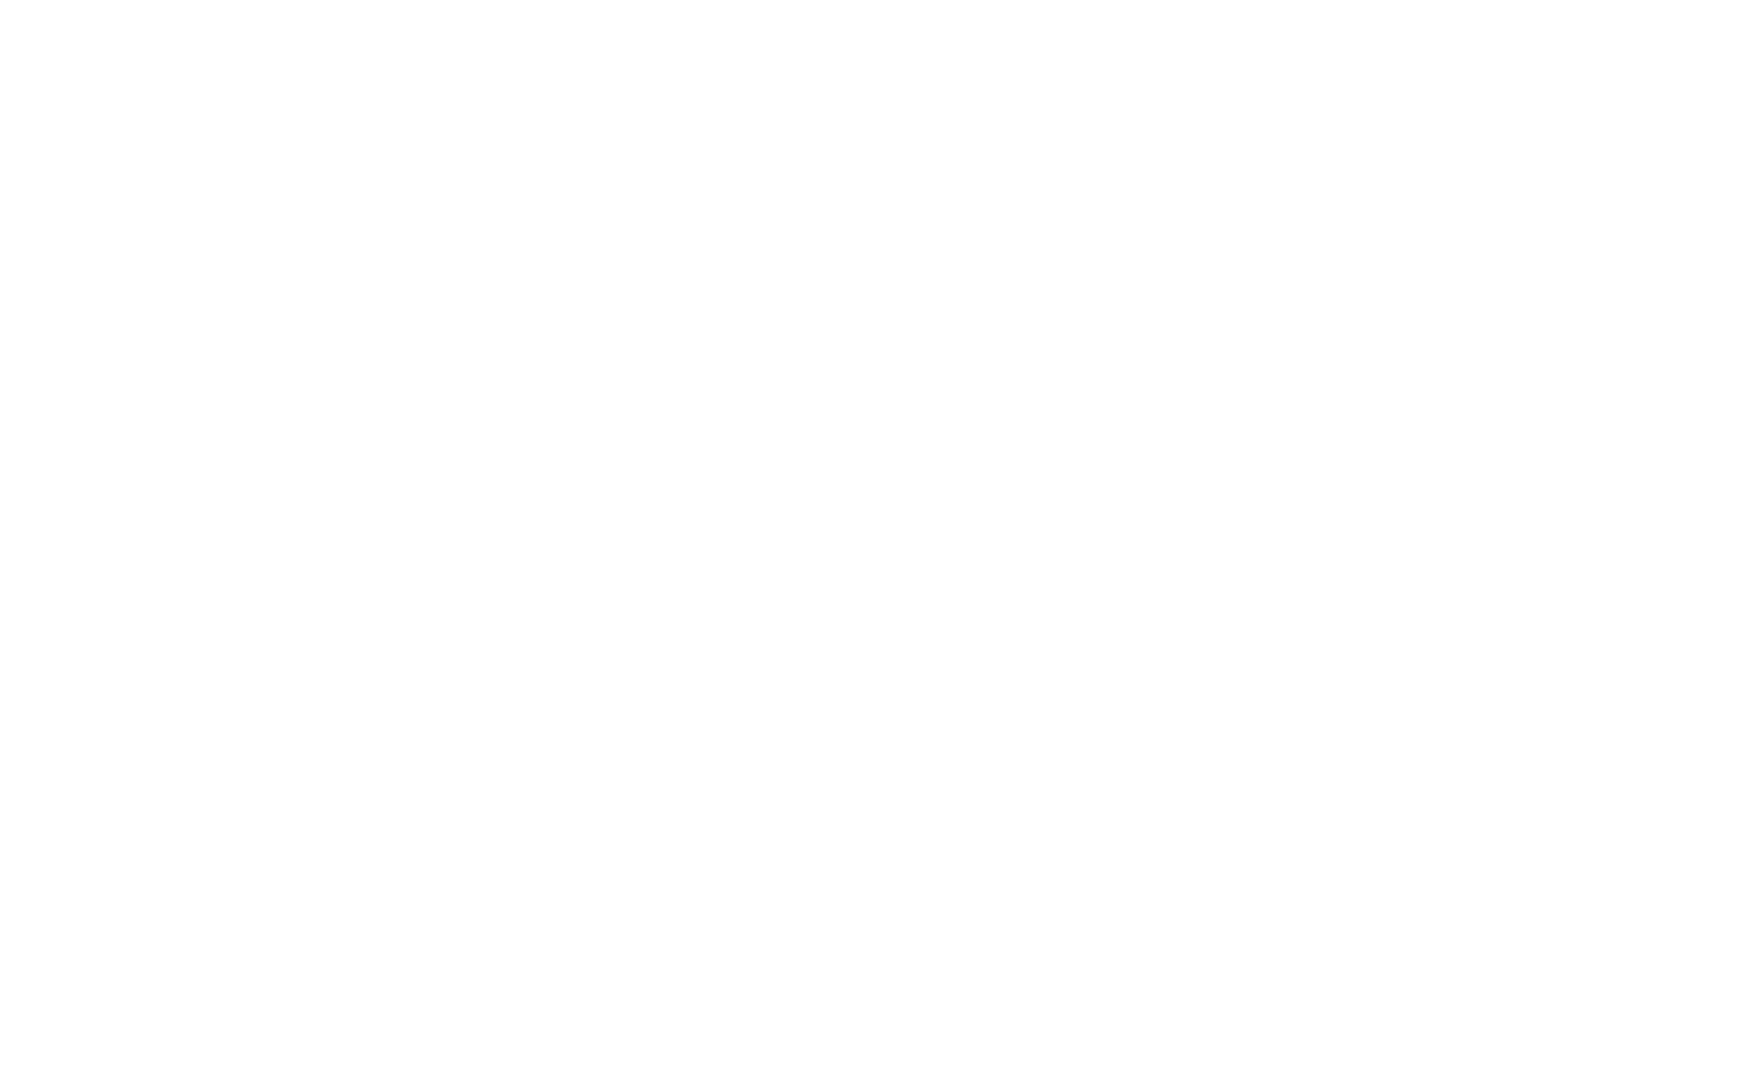 DELAWARE &SIEGERREBE SPARKLING WINE 2022